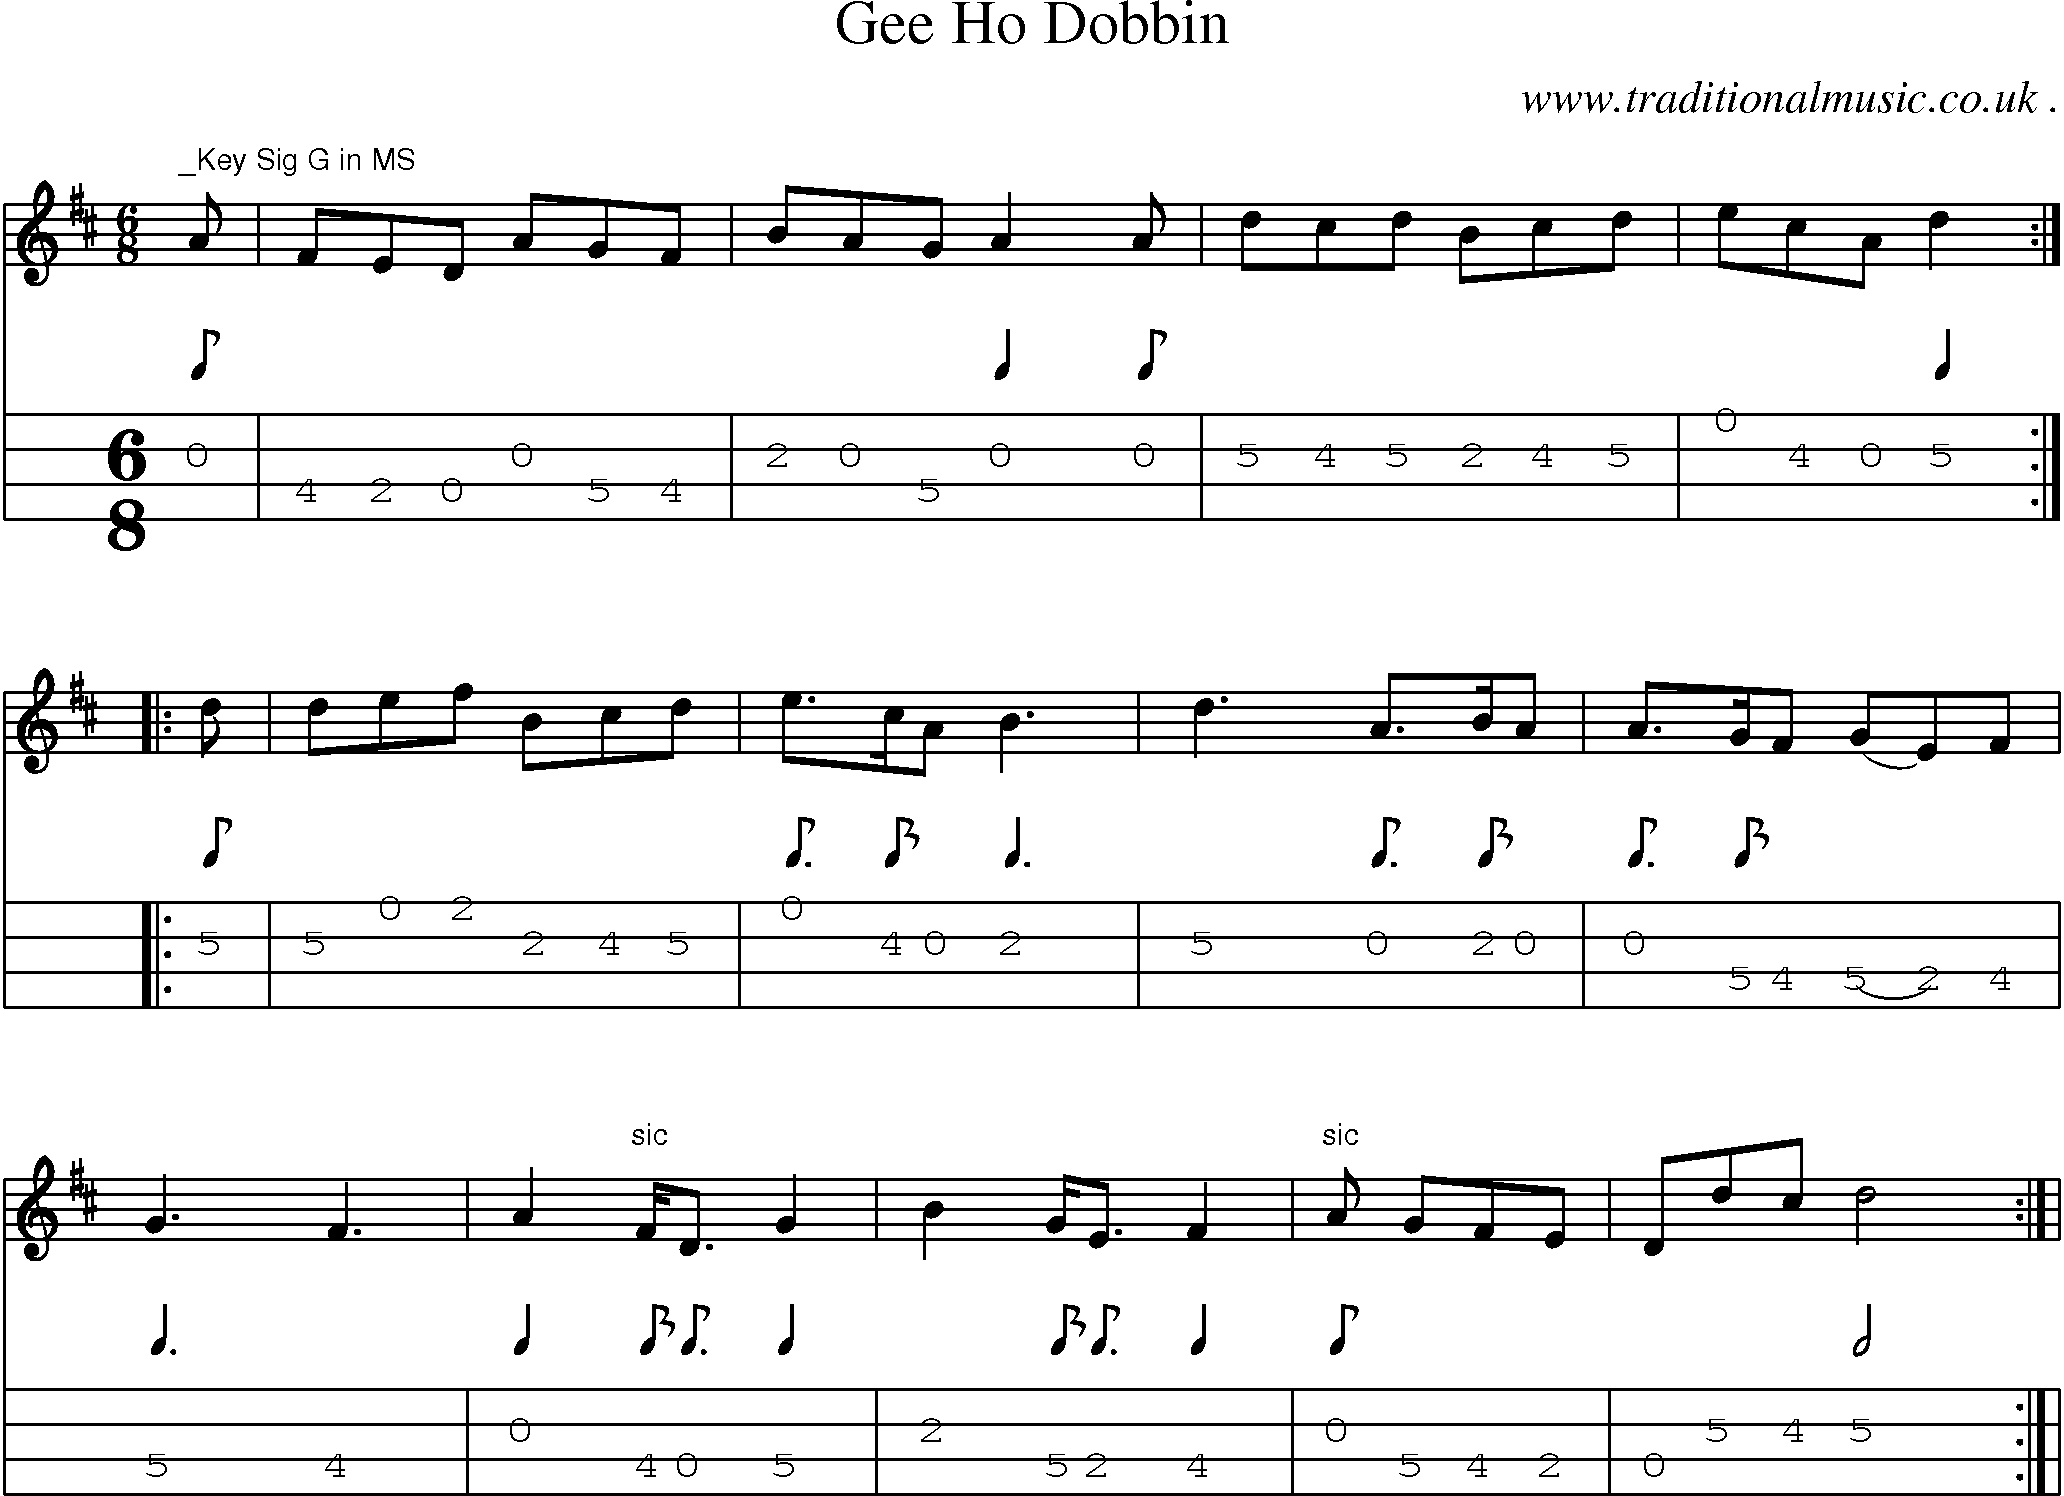 Sheet-Music and Mandolin Tabs for Gee Ho Dobbin